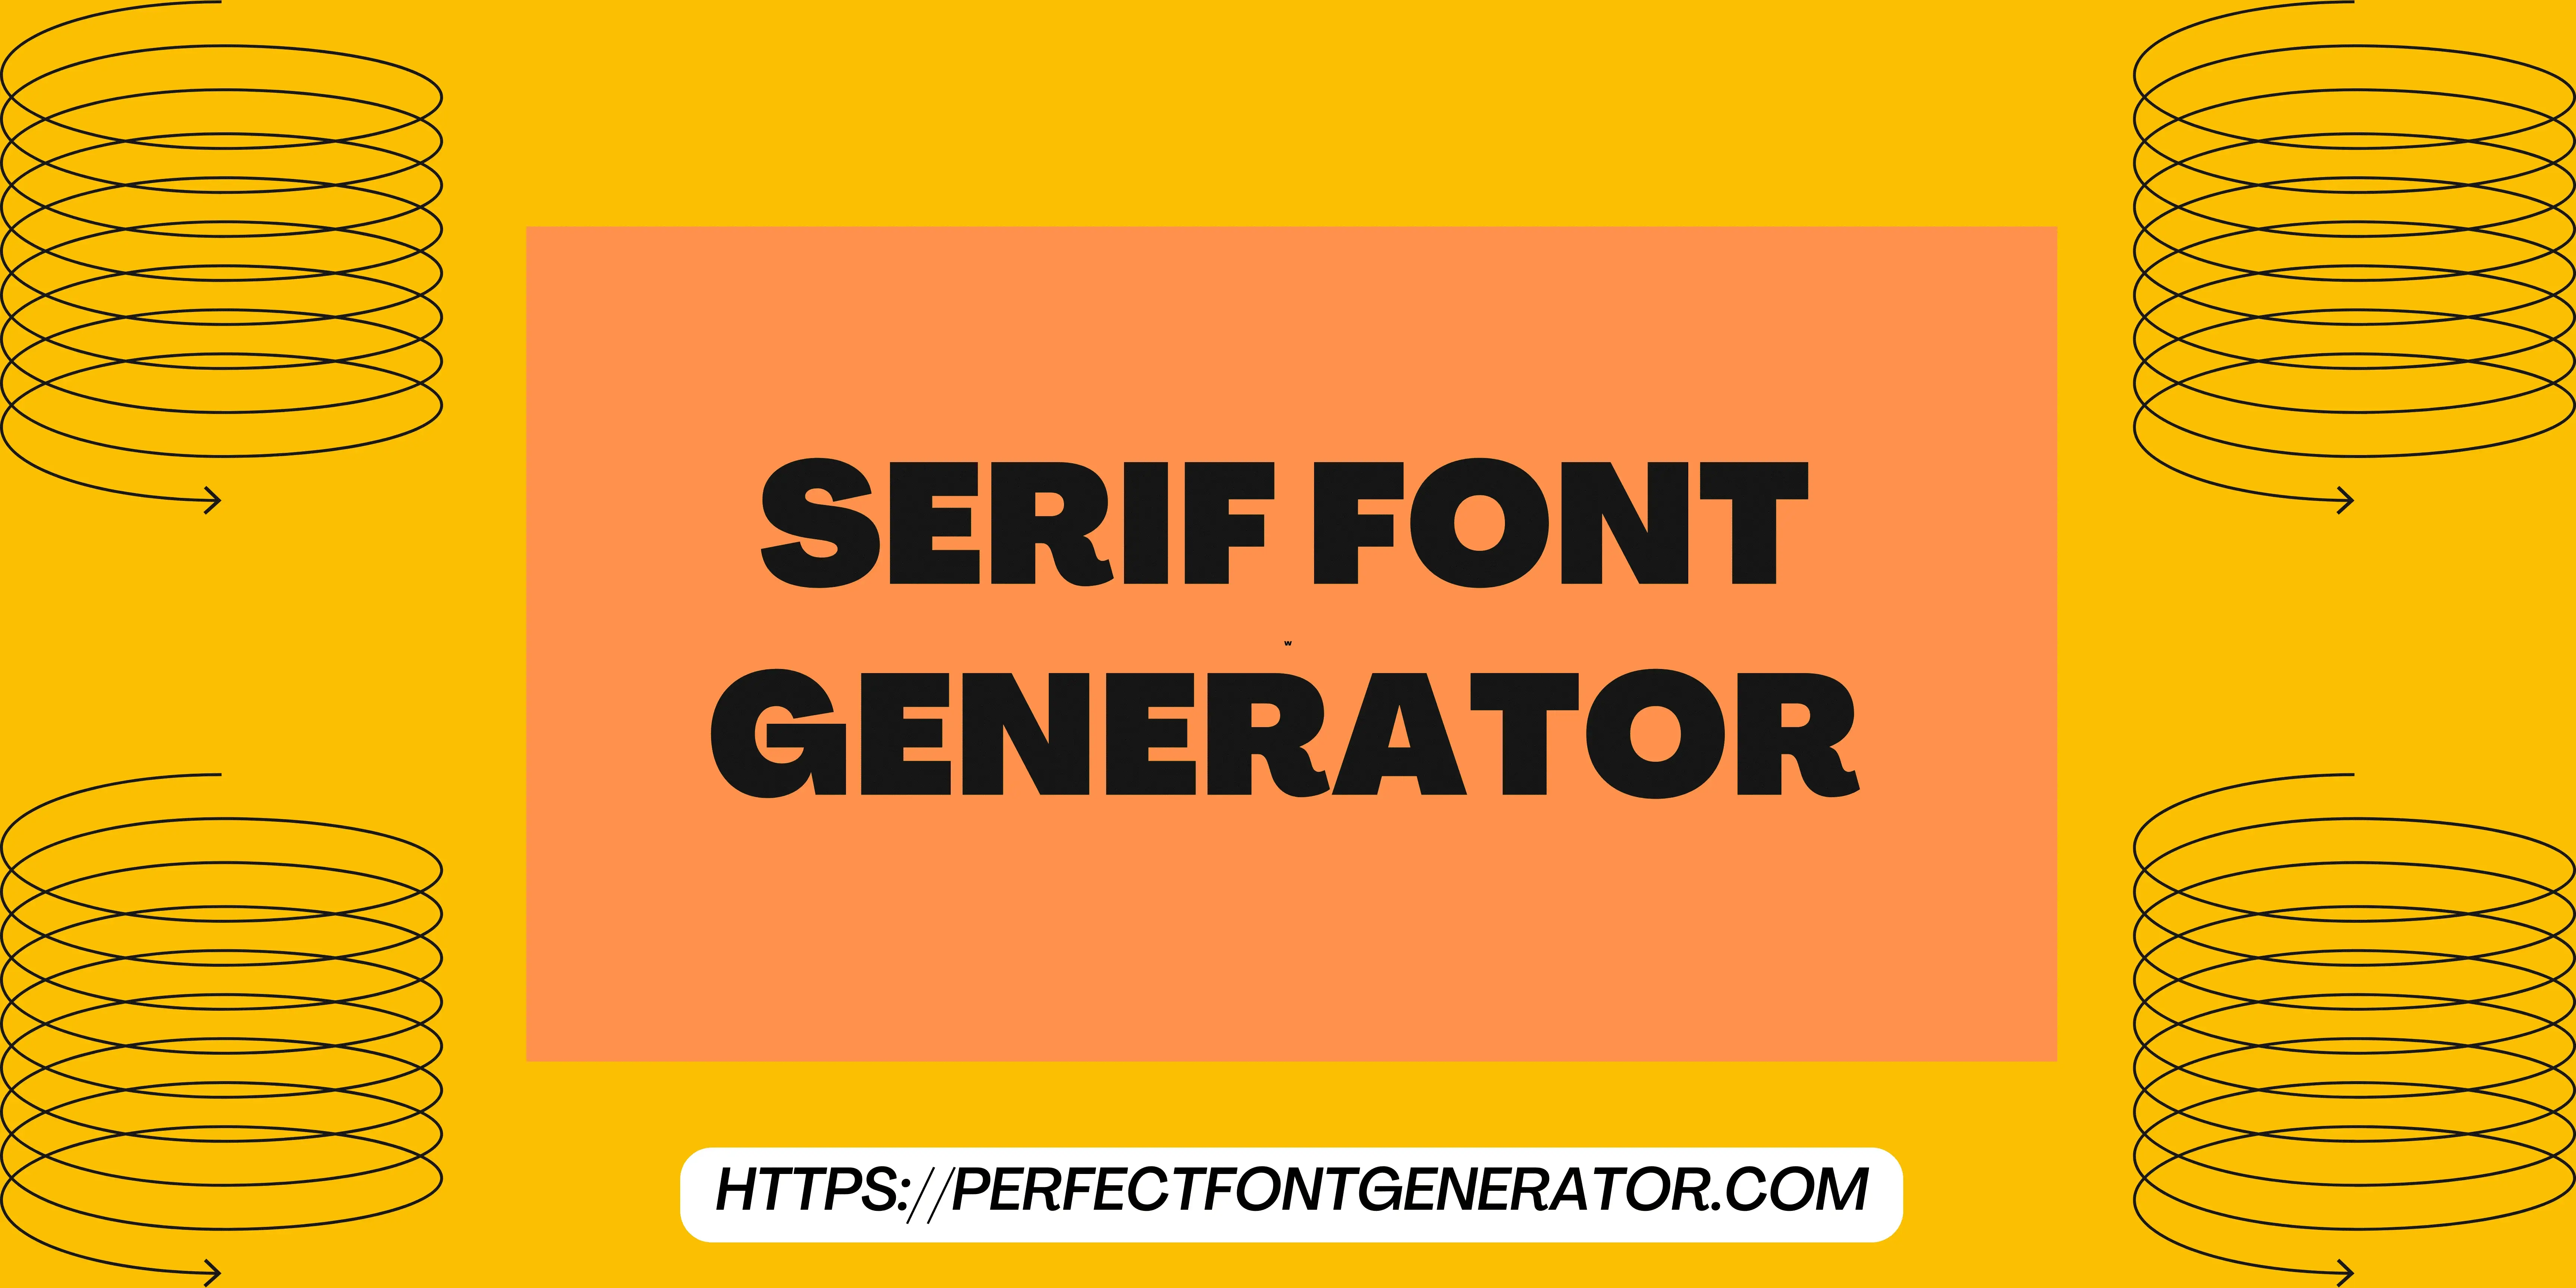 serif font generator